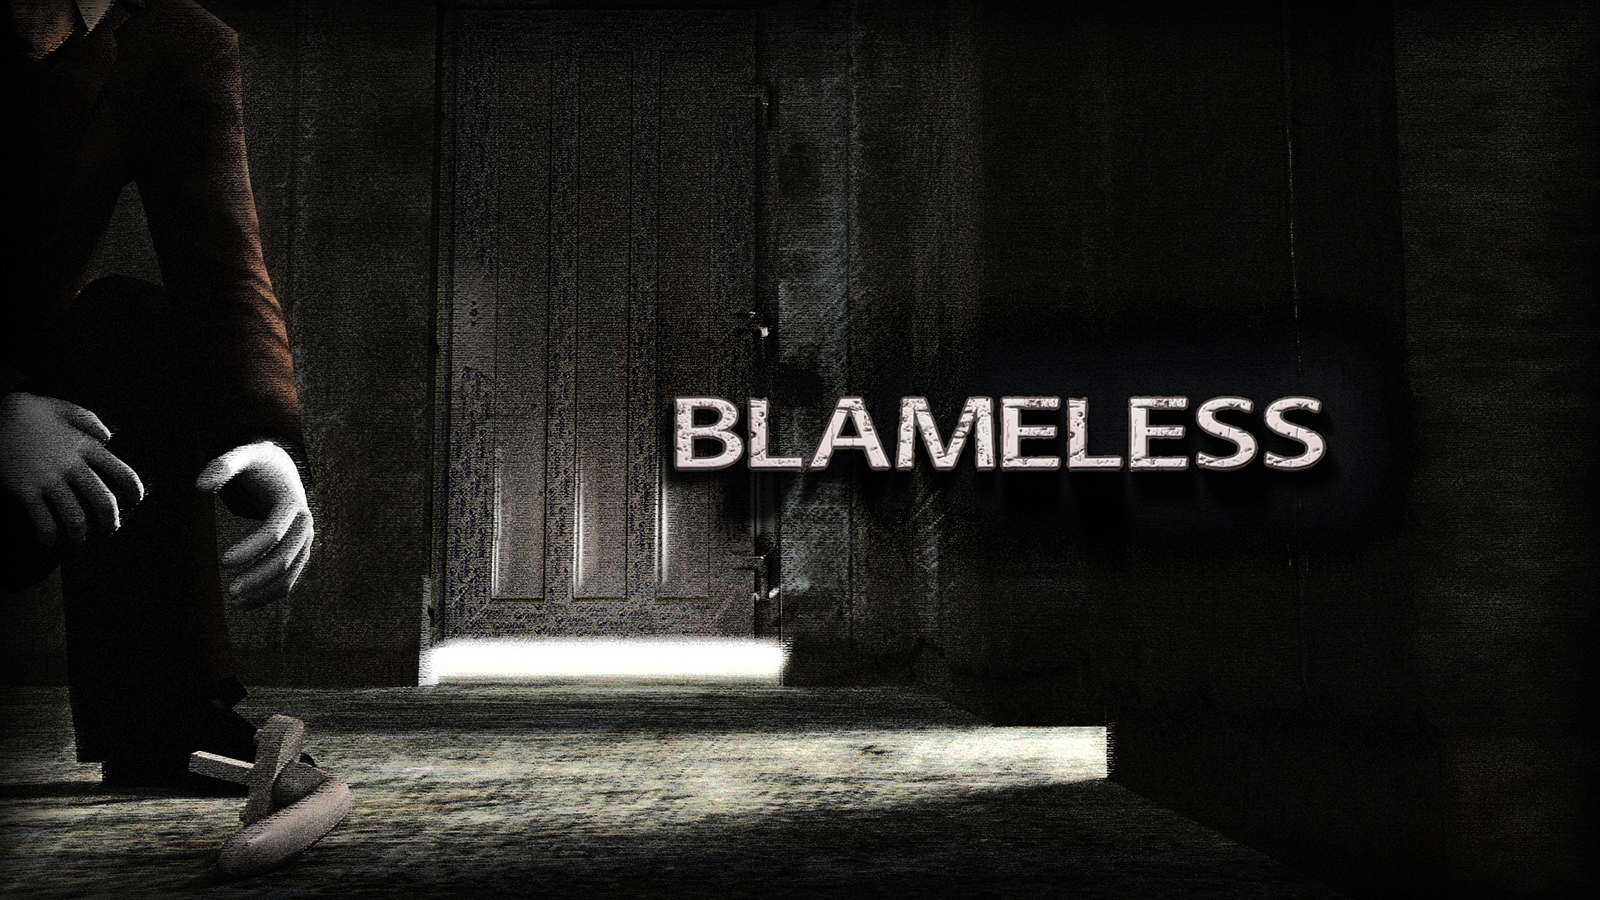 Example sentences containing 'blameless'